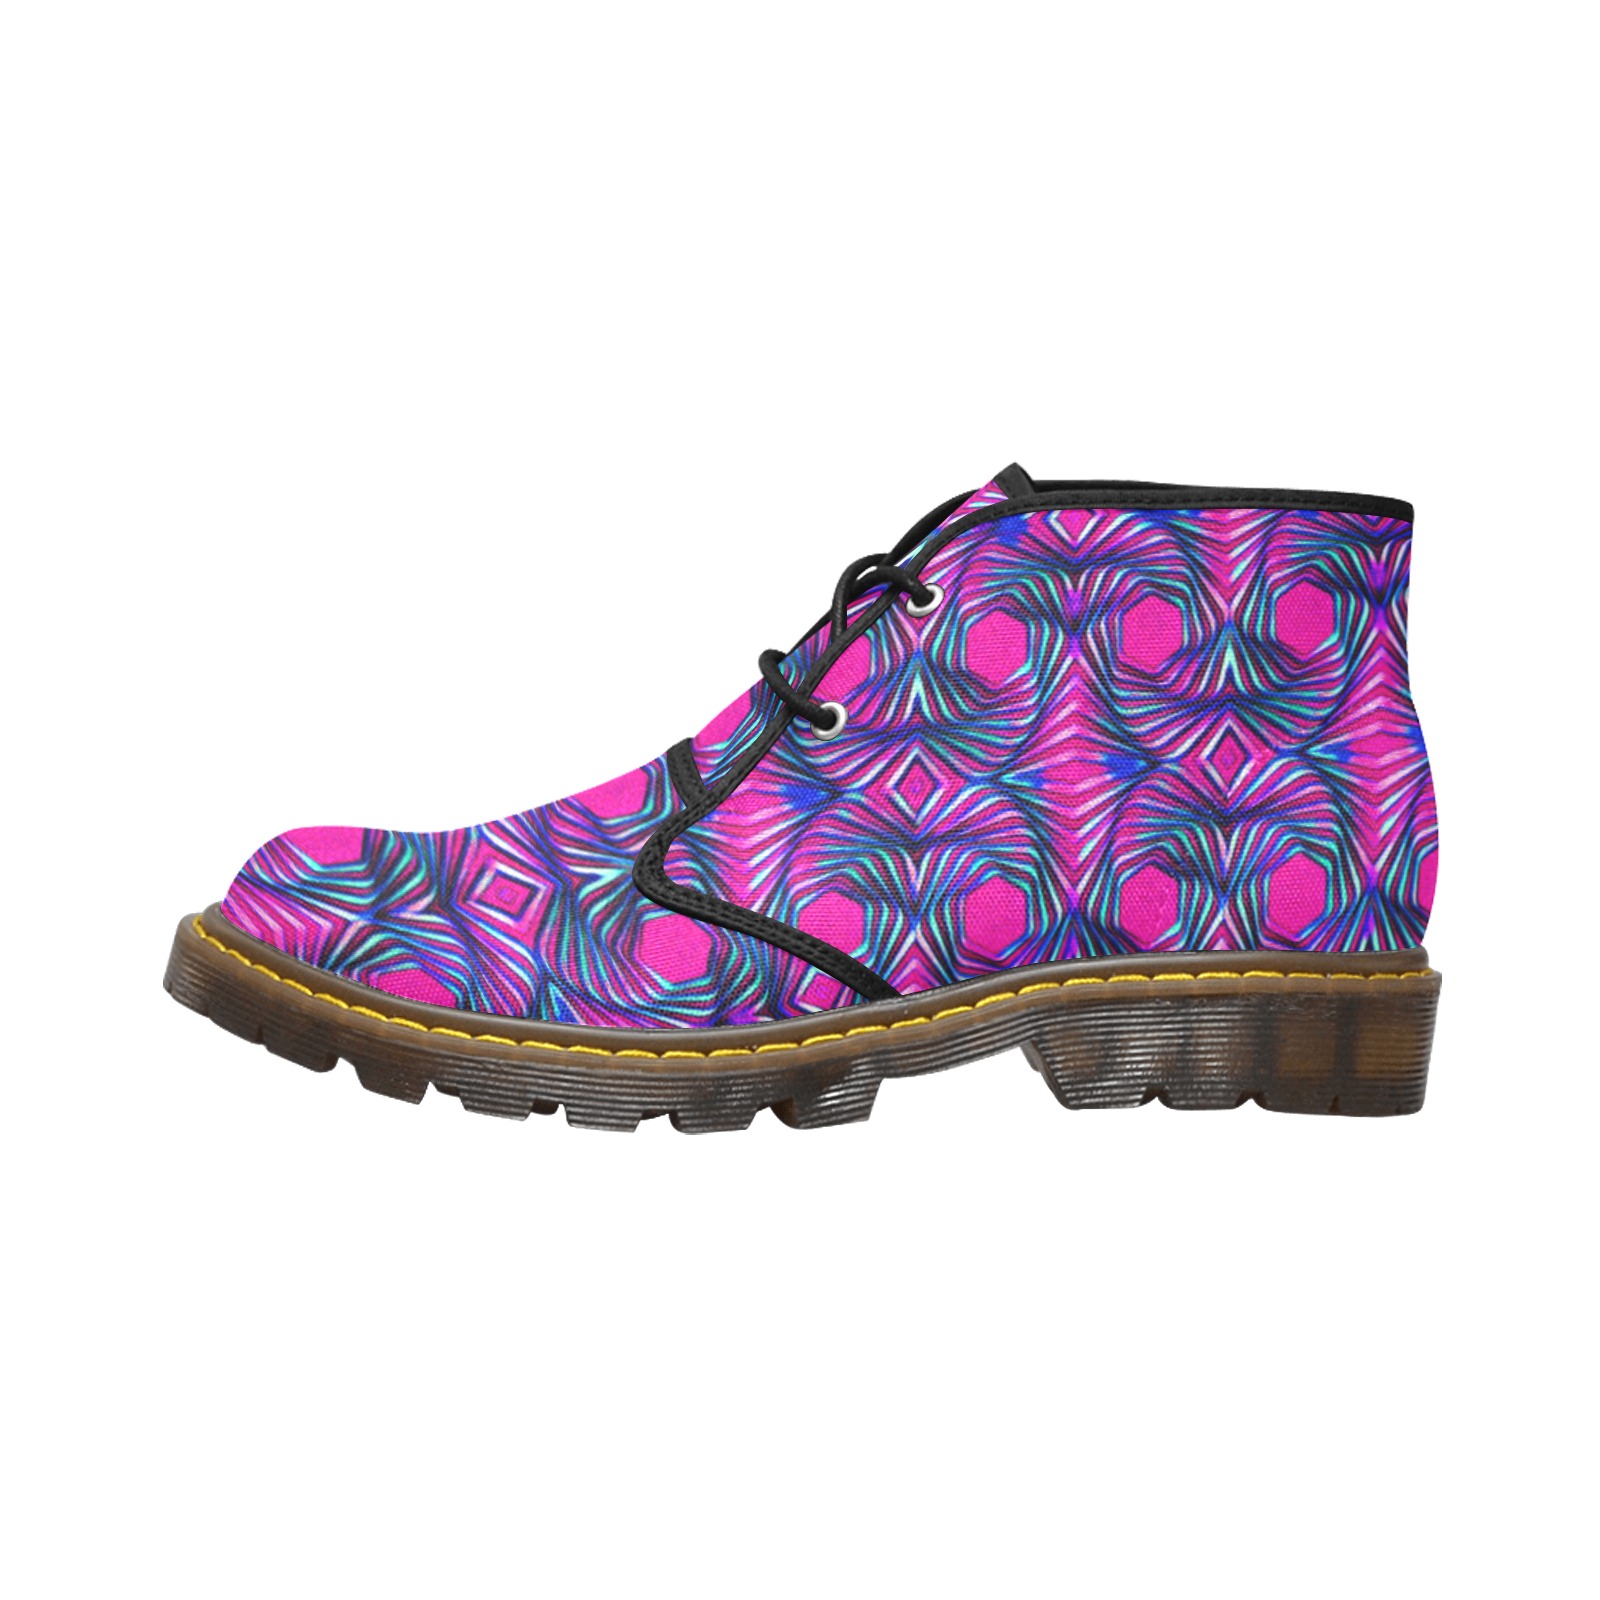 Knots X Women's Canvas Chukka Boots (Model 2402-1)